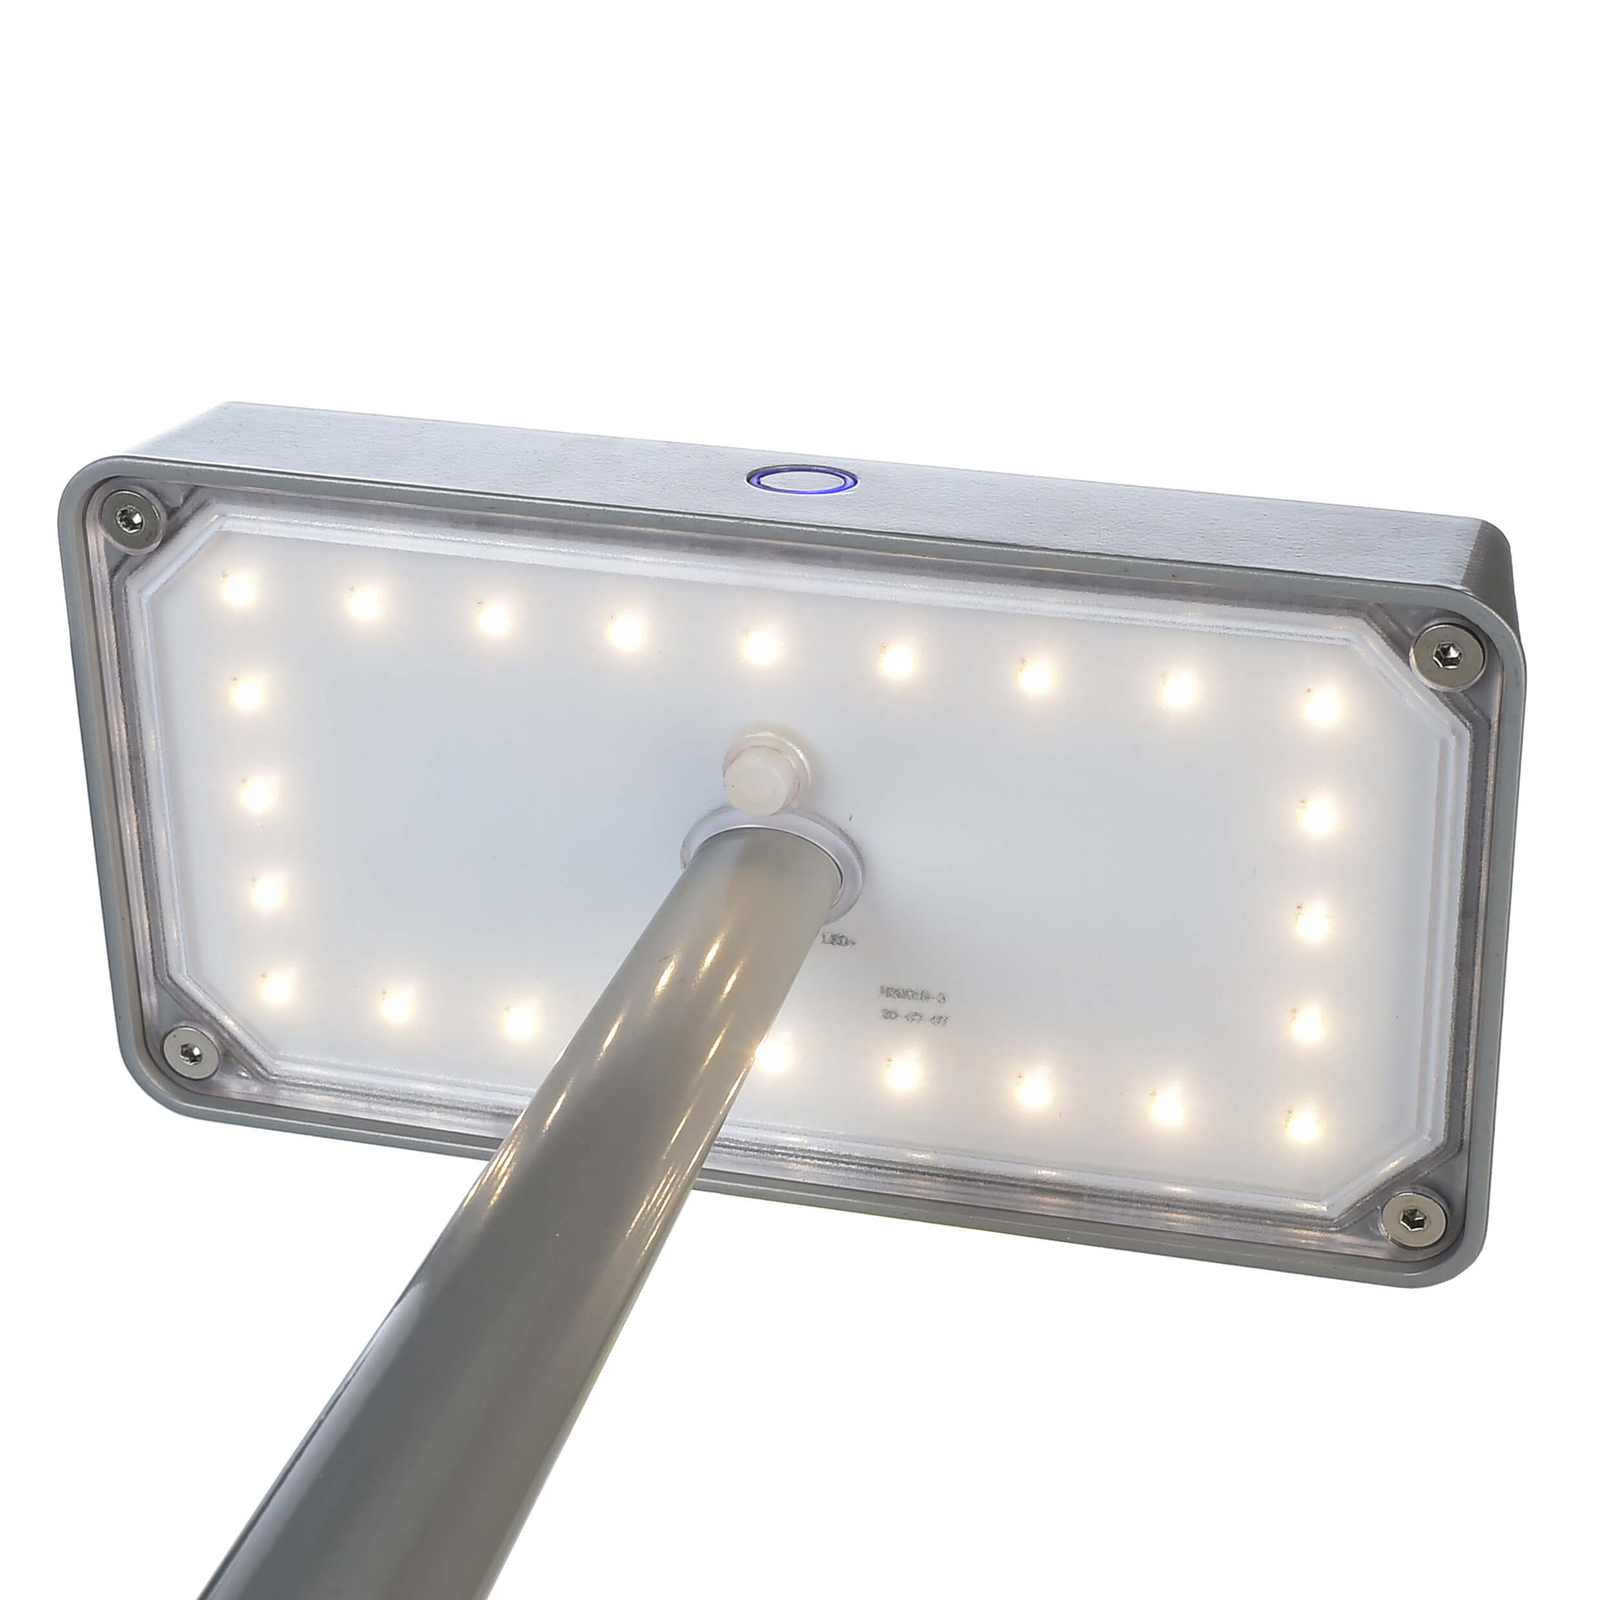 LED tafellamp Algieba, accugestuurd, grijs